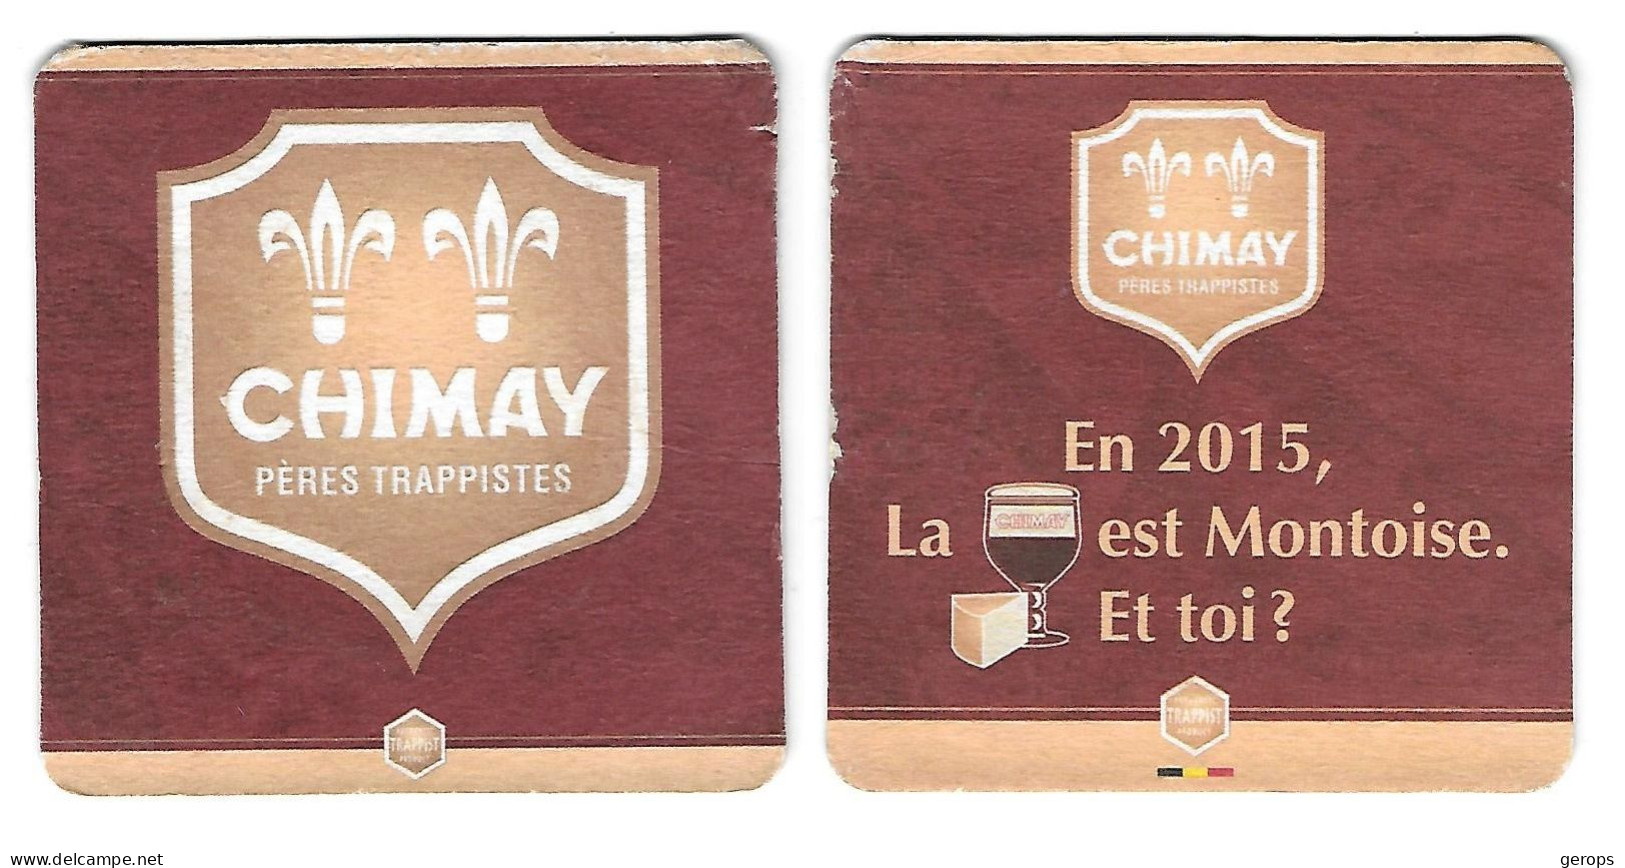 13a Chimay Péres Trappistes Rv 2015 (beschadigd) - Sous-bocks